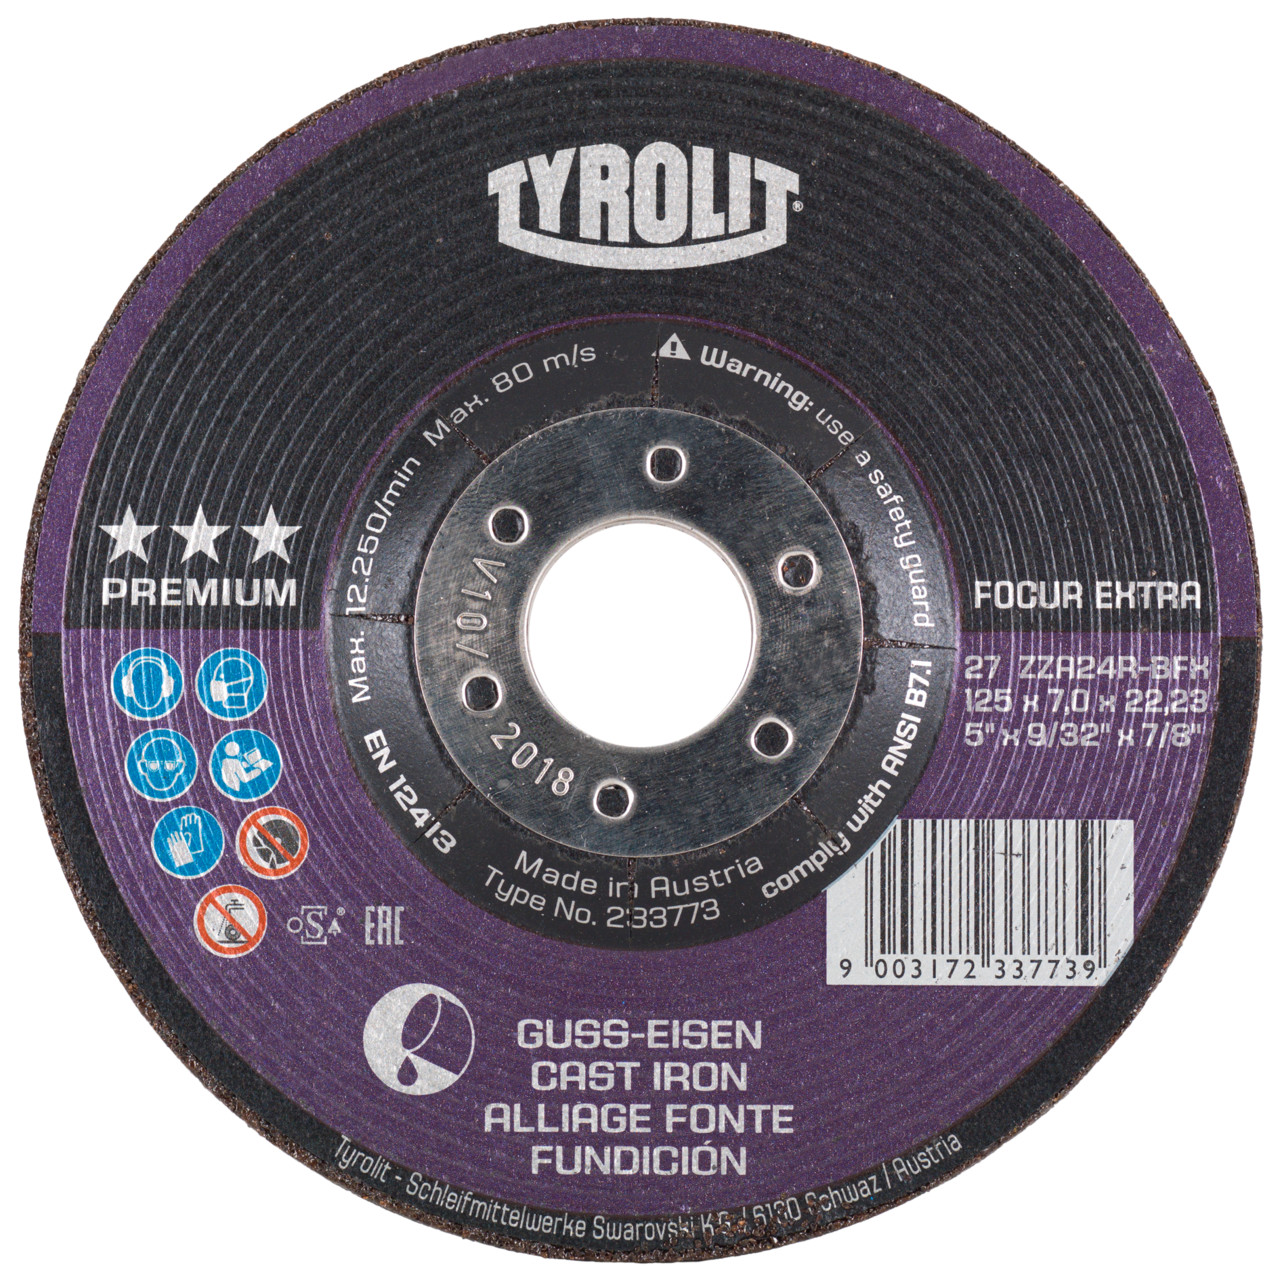 TYROLIT disco de desbaste DxUxH 178x7x22,23 FOCUR Extra para fundición gris, forma: 27 - versión offset, Art. 233768